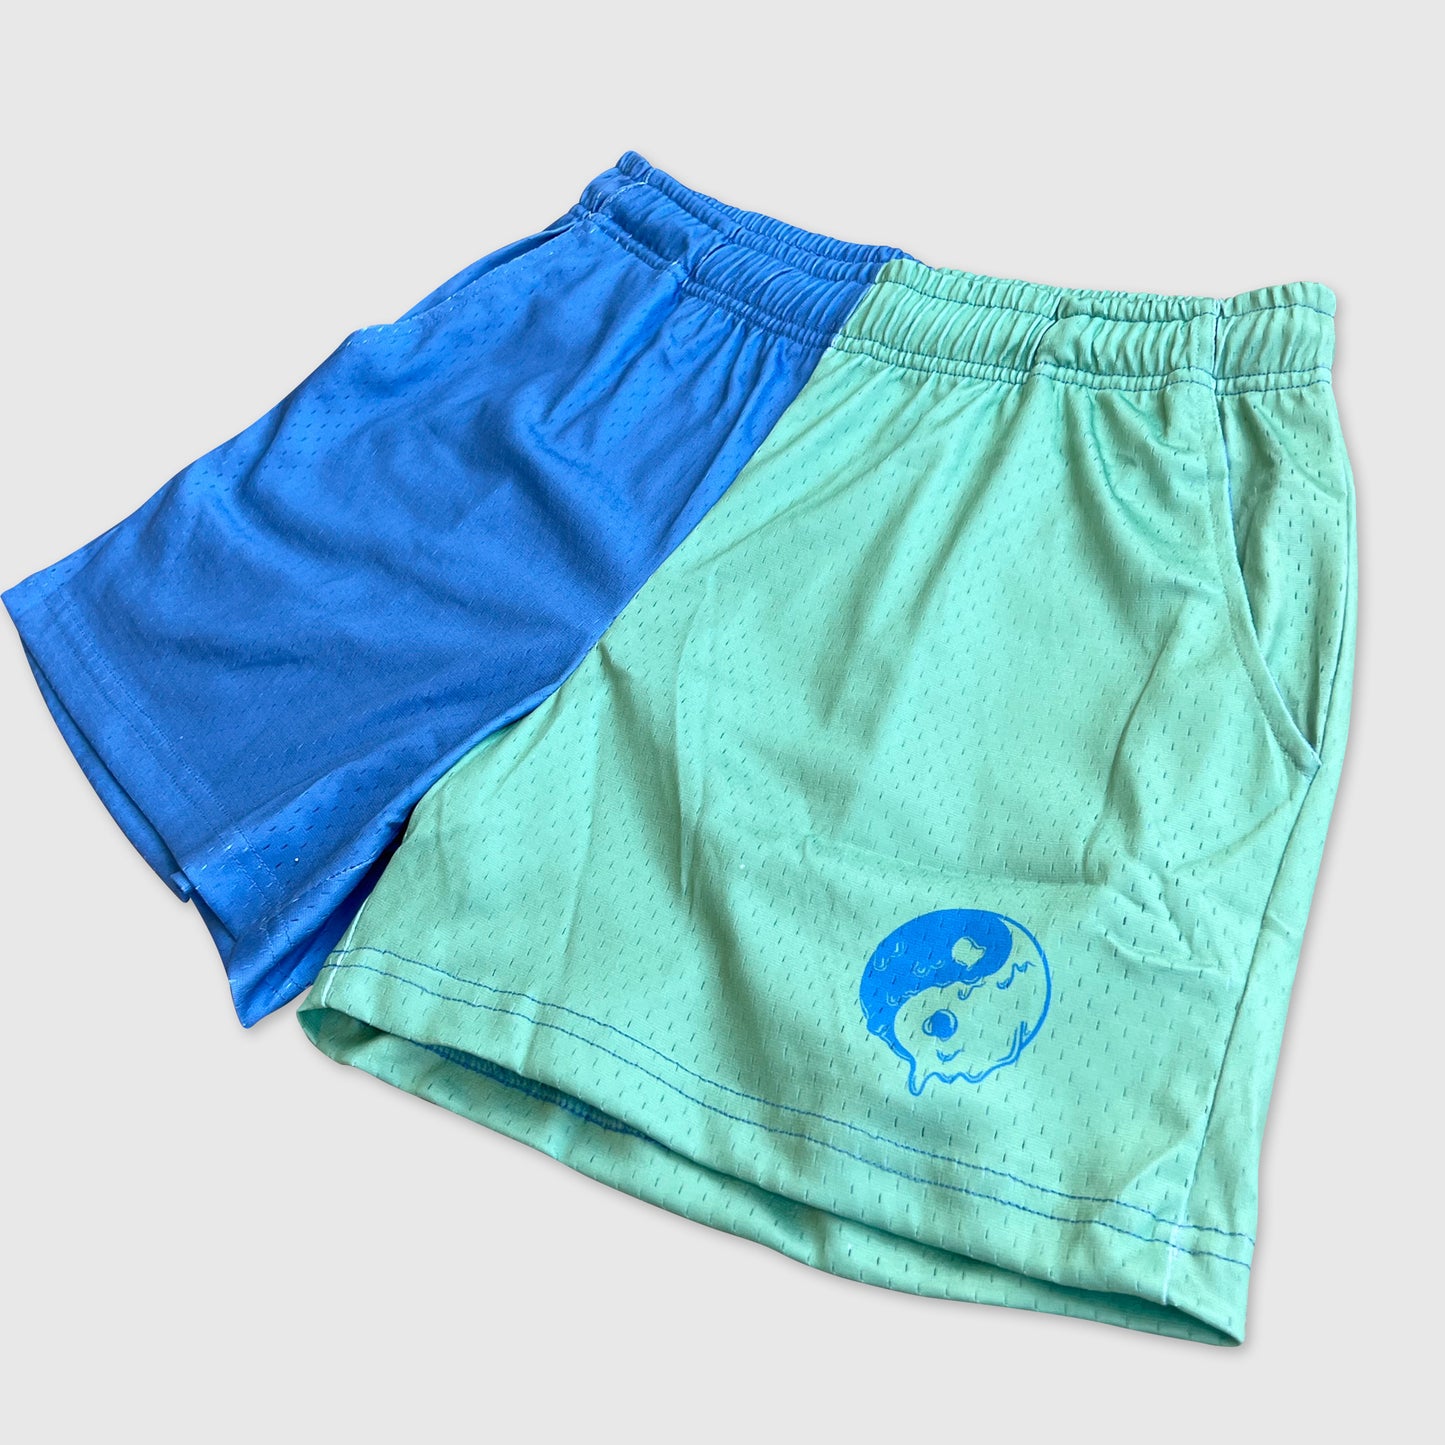 Yin Yang Drip Mesh Shorts 5" - Blue Mint Color Block